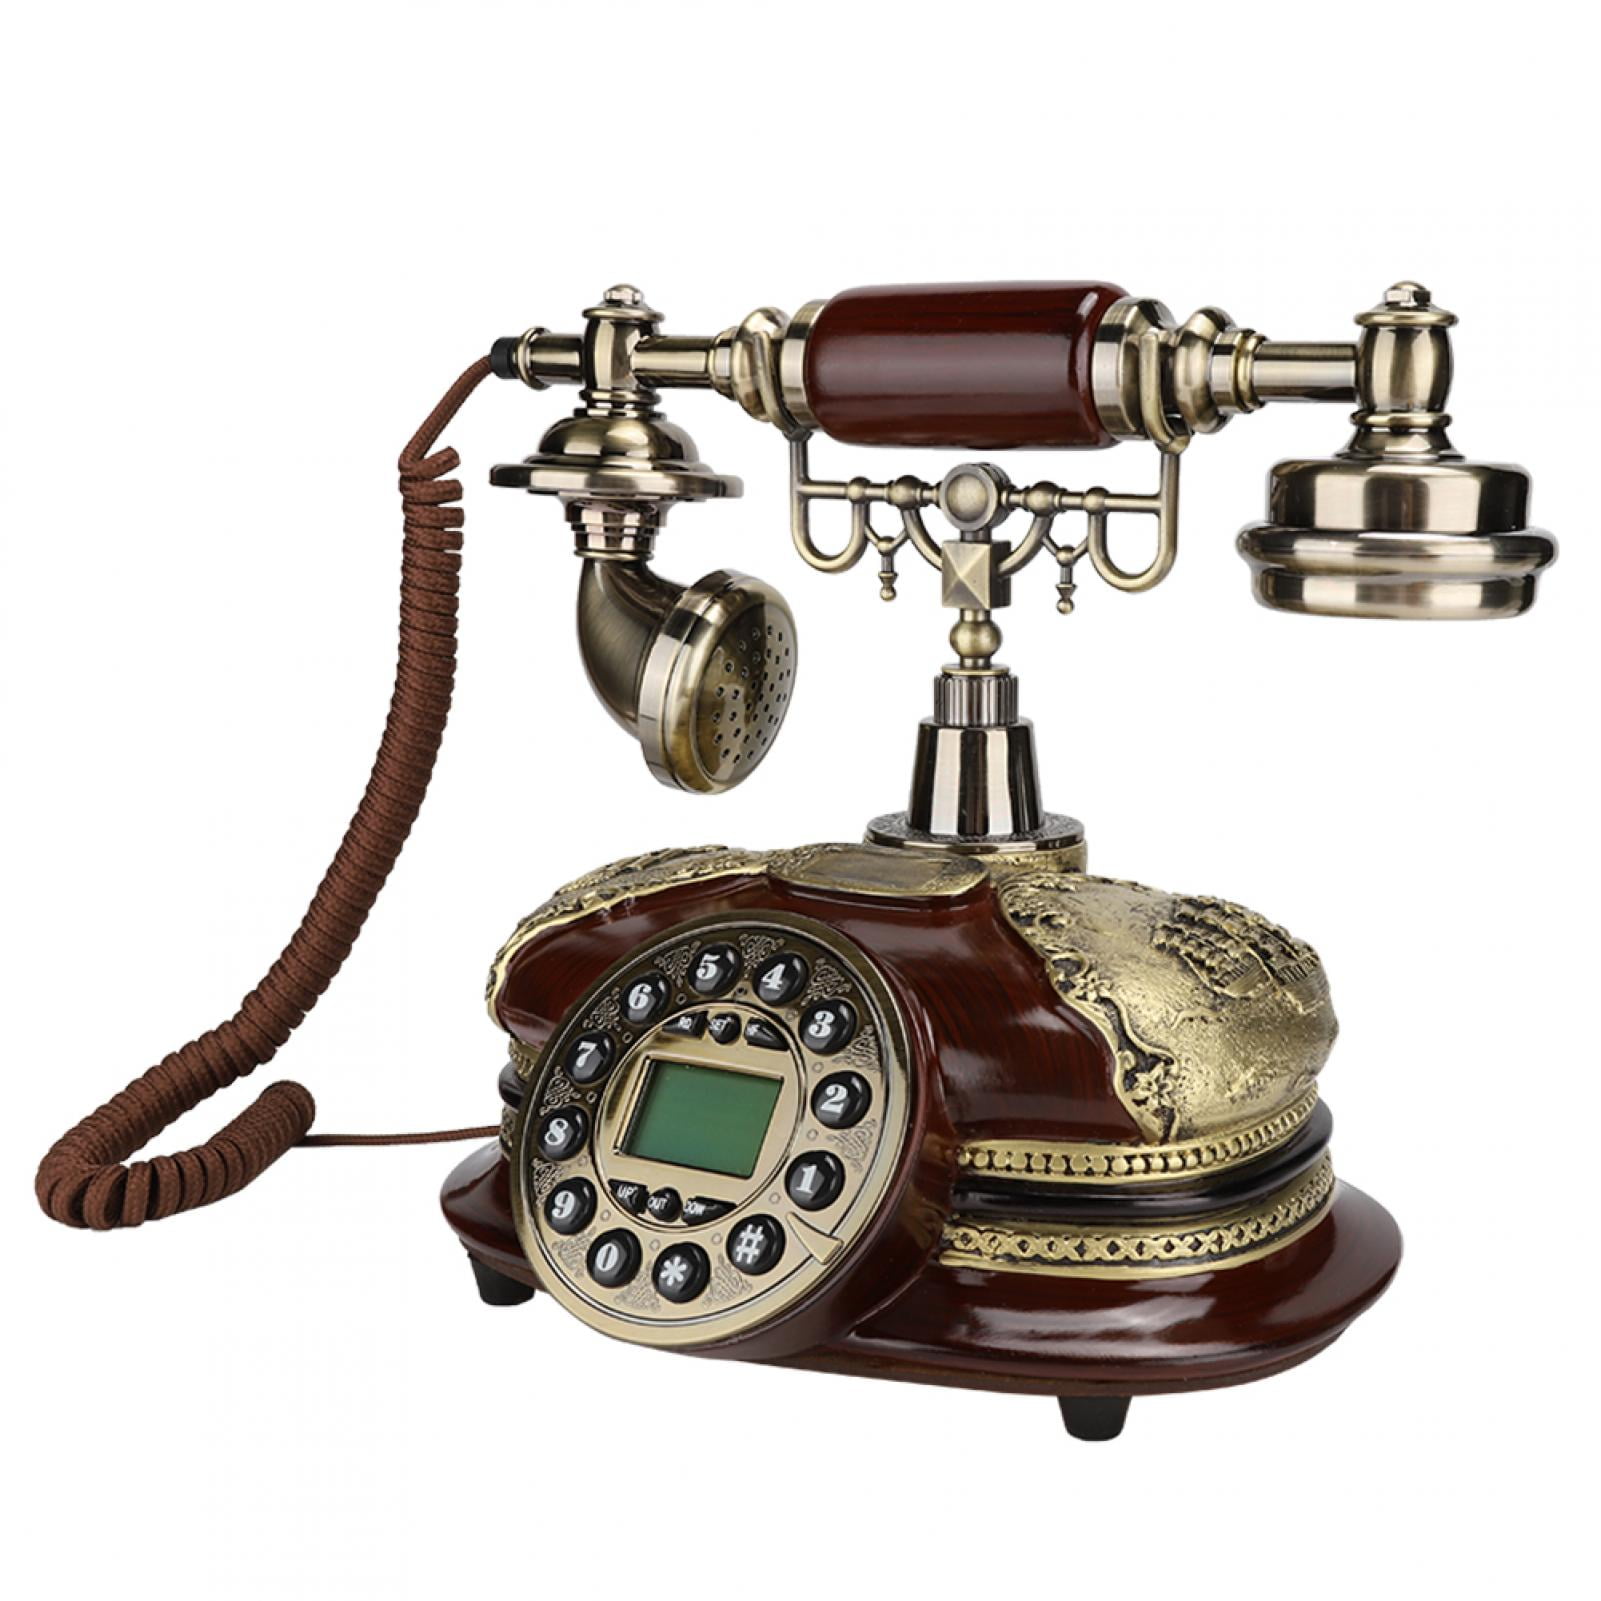 Details about   European Style Handset Turntable Telephone Landline Corded Phone Vintage Antique 